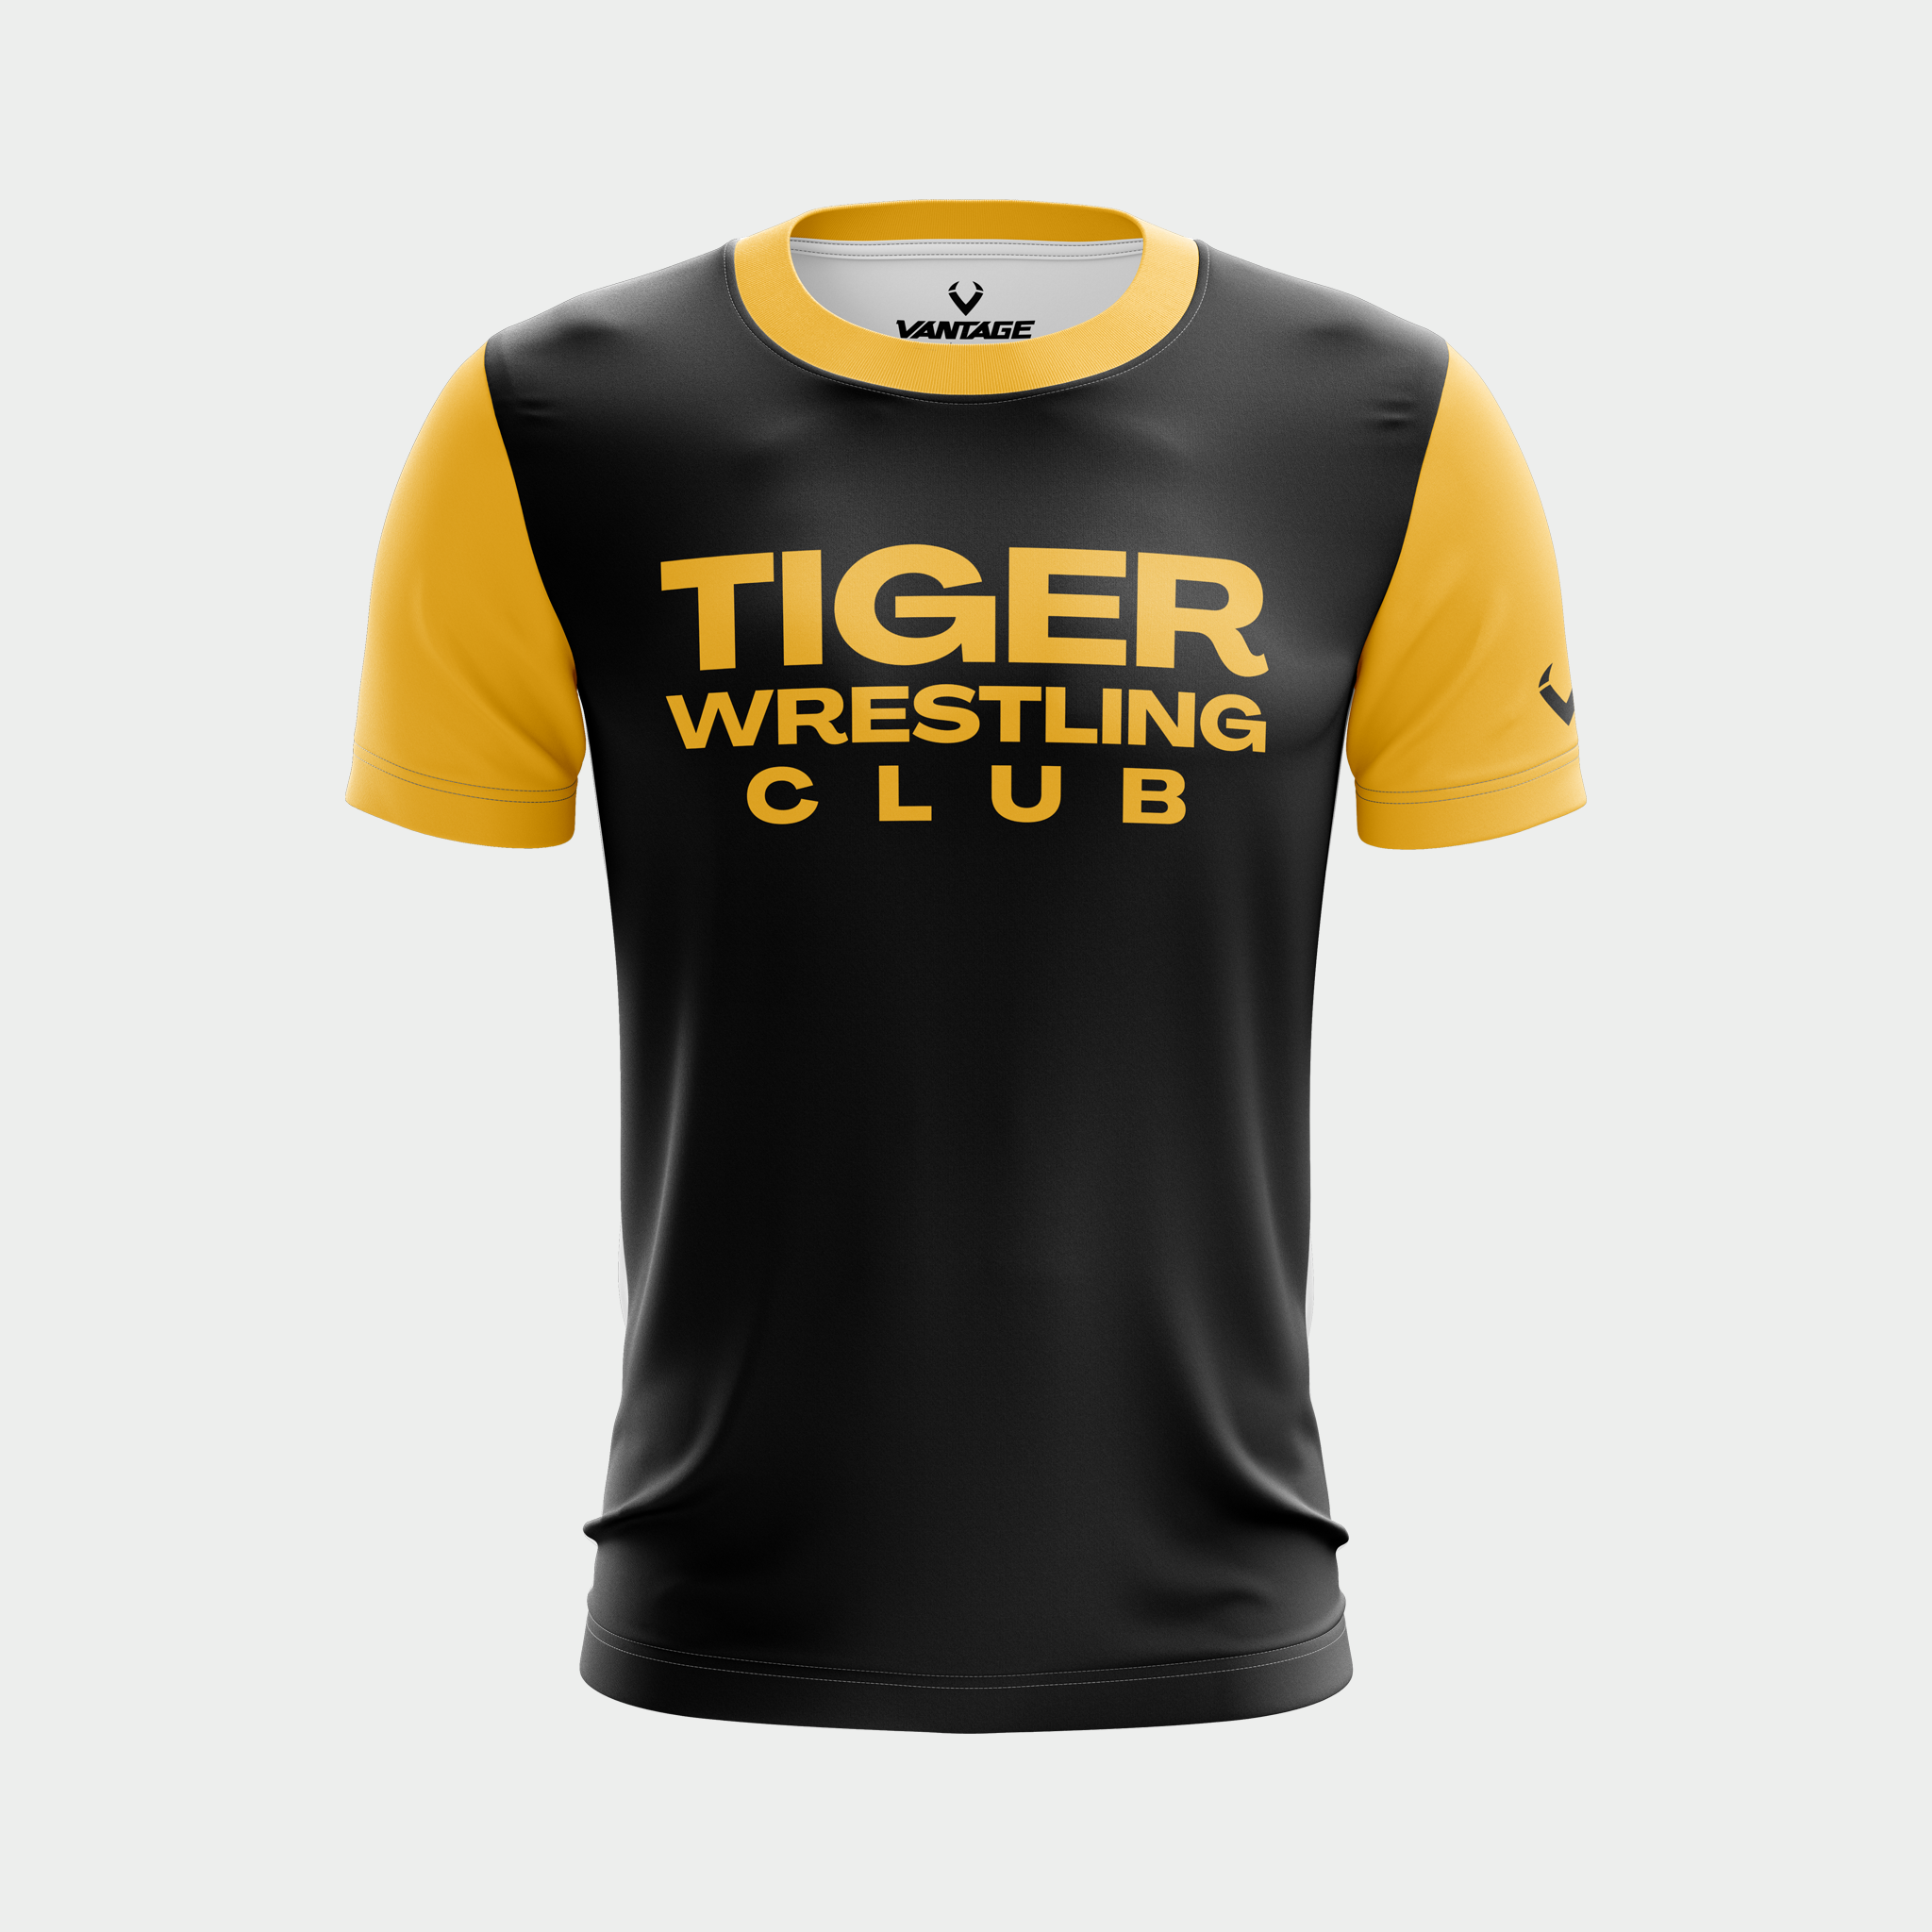 Tiger Wrestling Club - Contender Series Tee